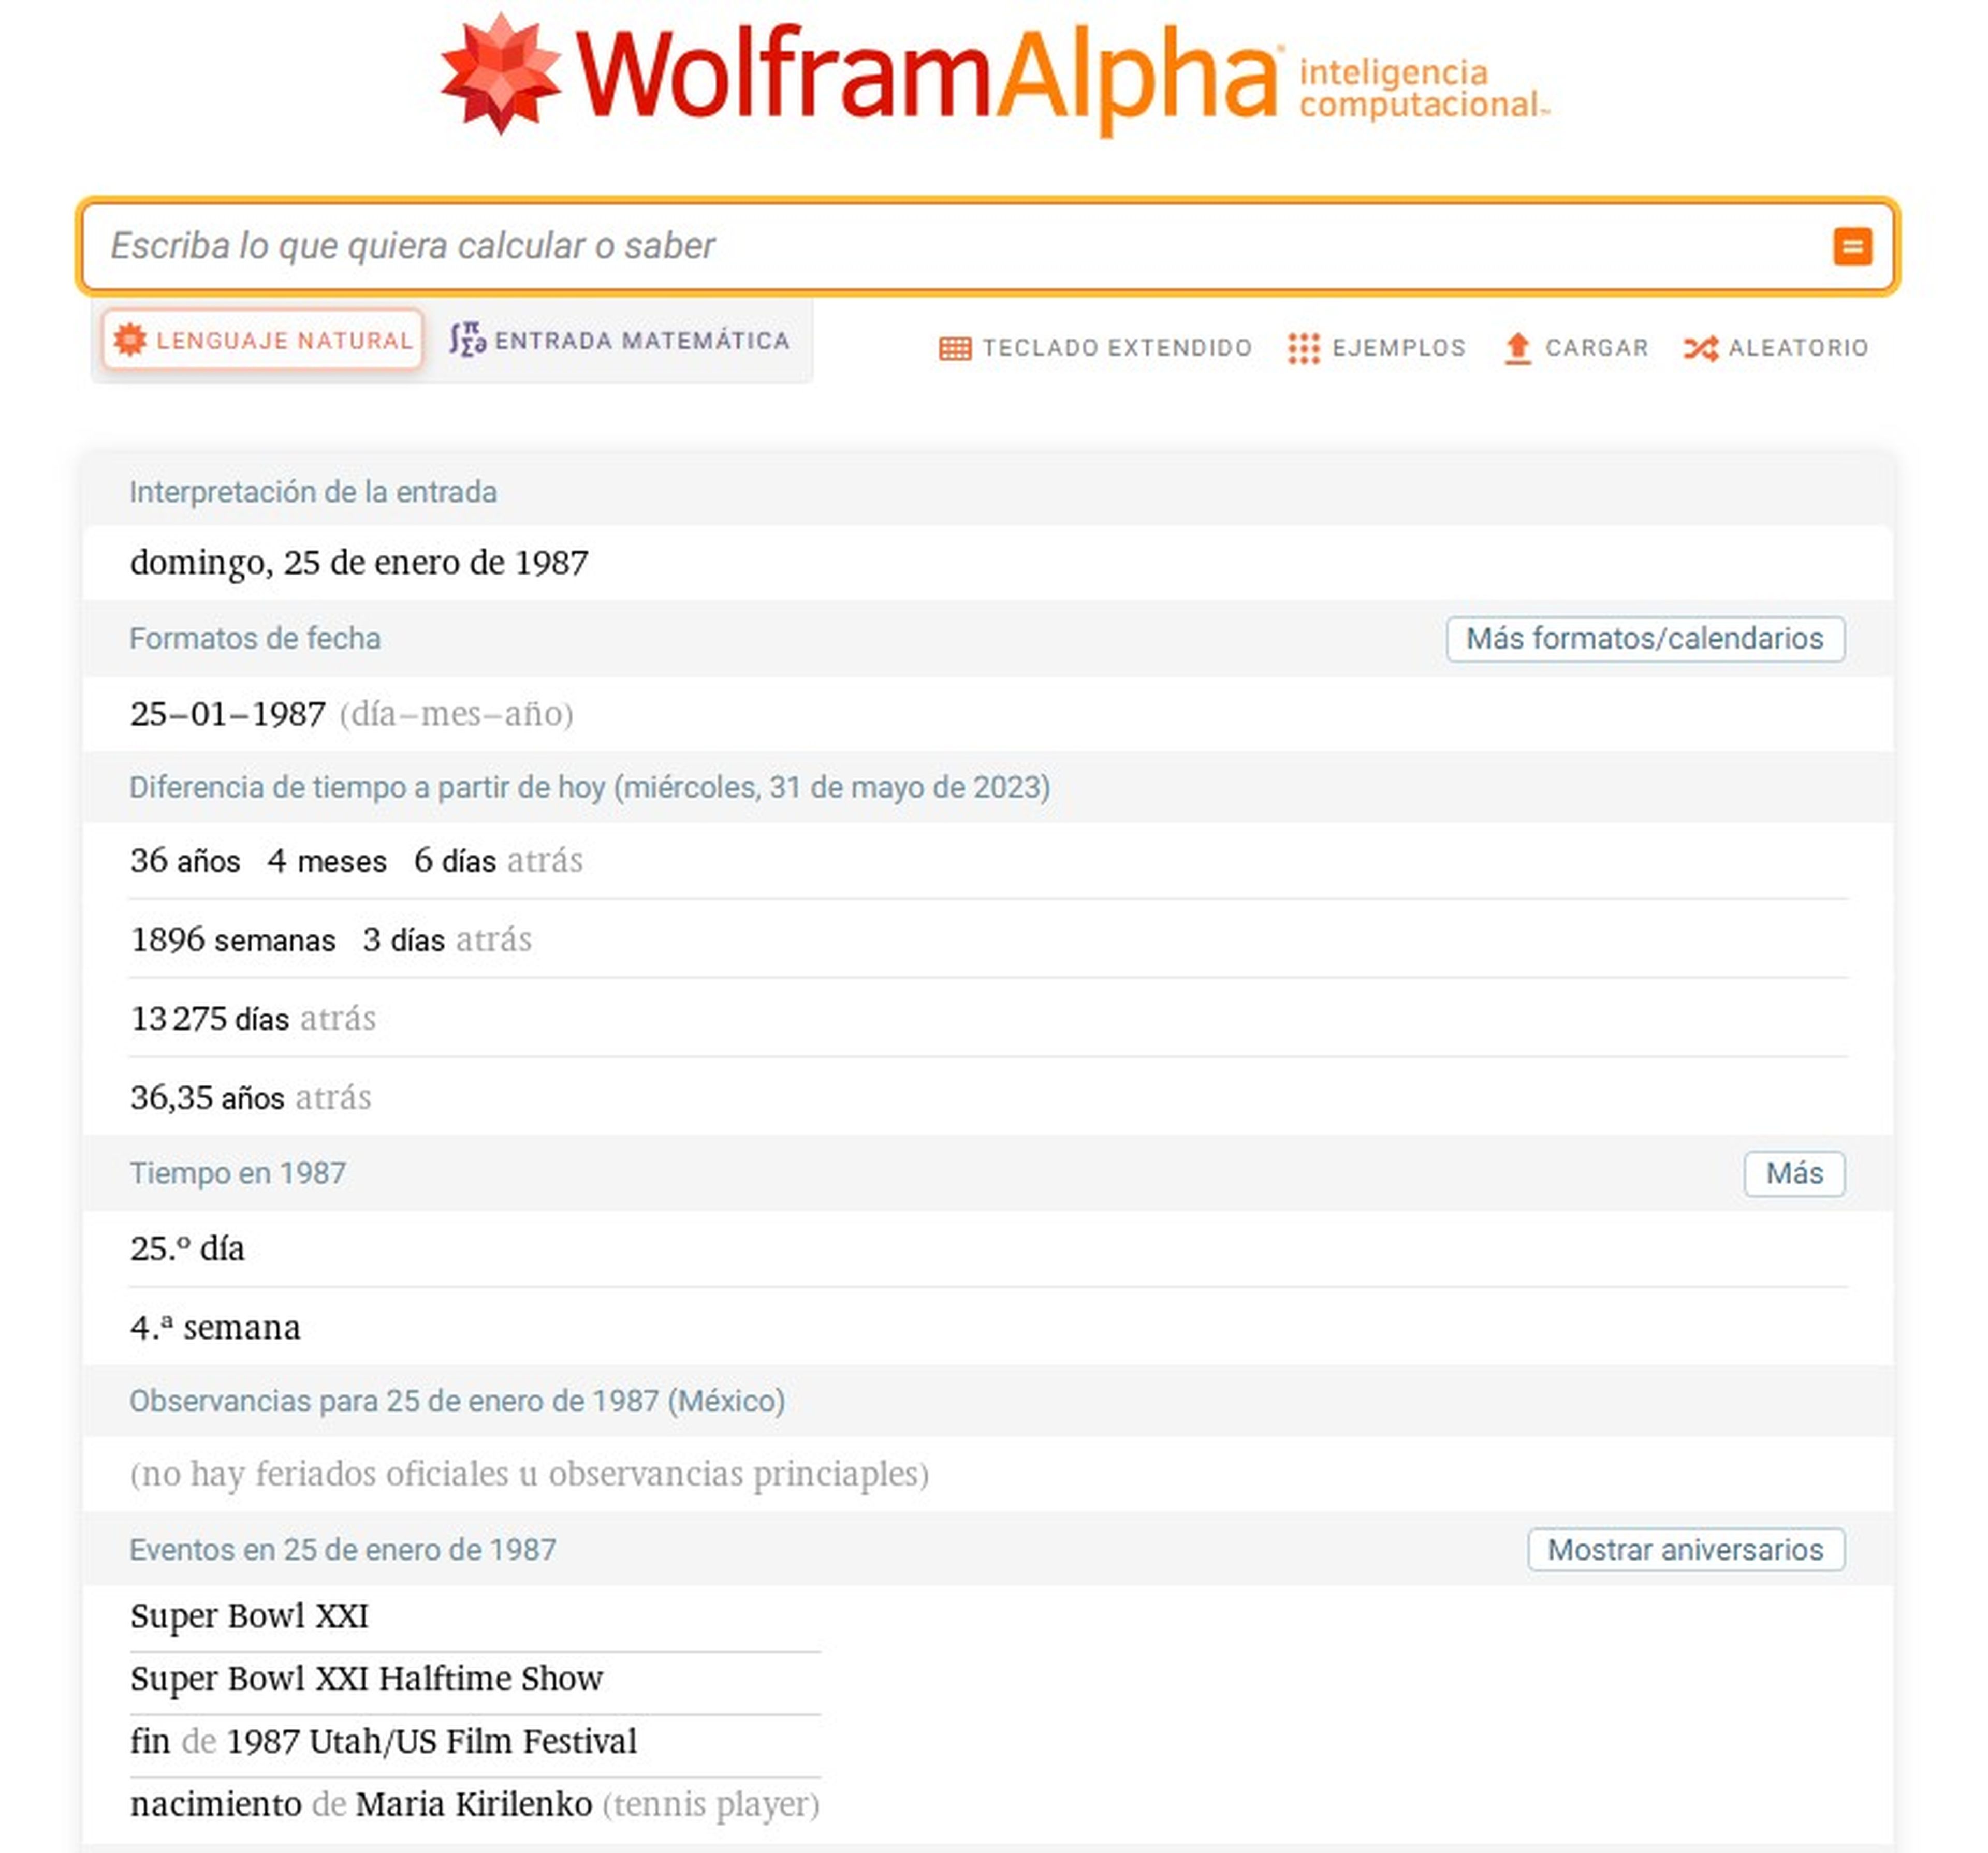 Wolfram Alpha IA